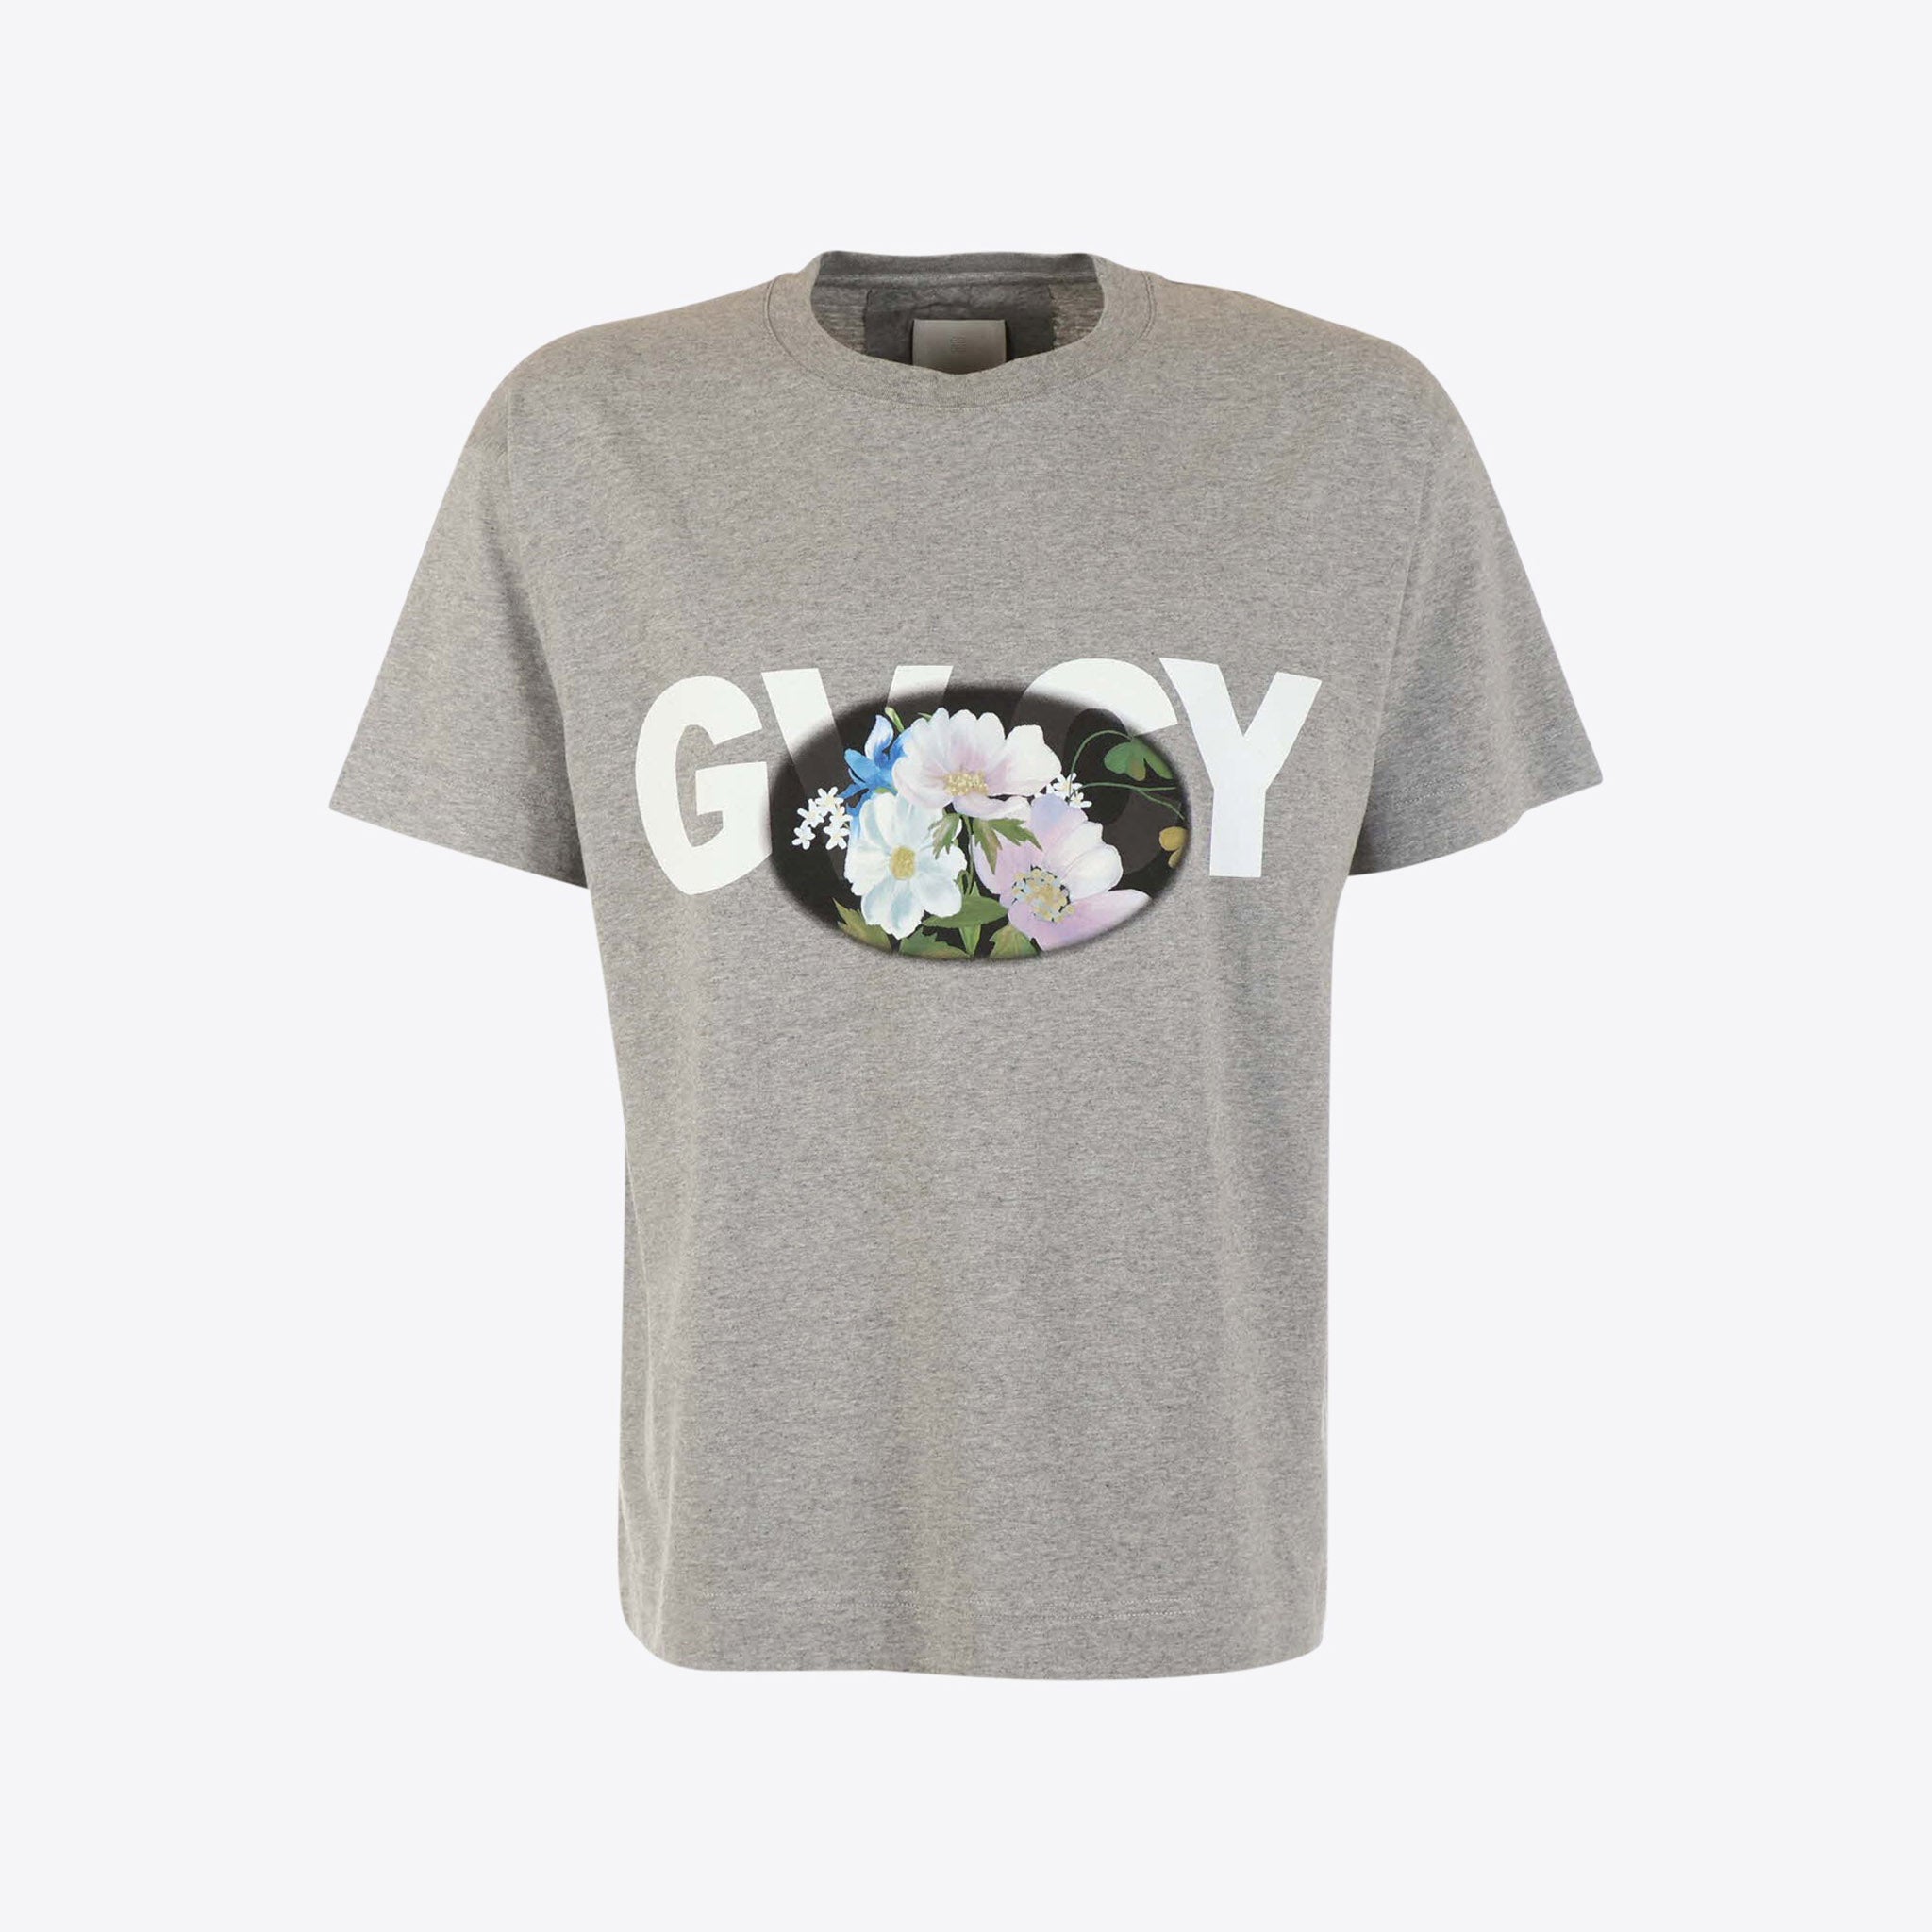 Givenchy T-shirt Grijs Flower